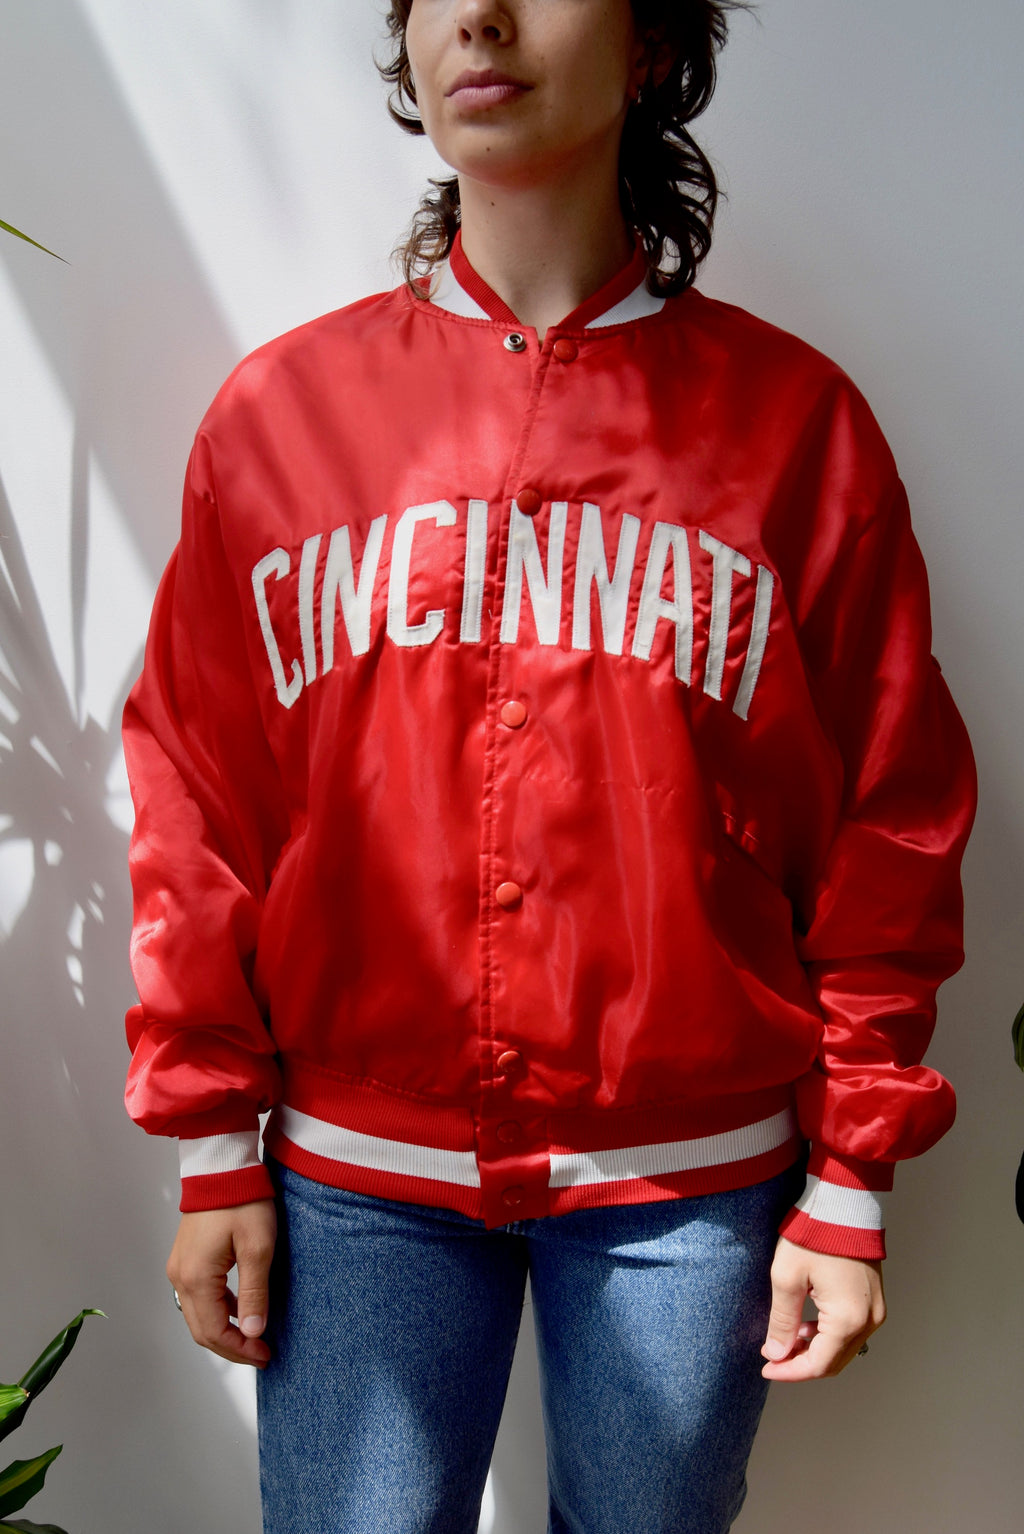 Cincinnati Reds Satin Jacket